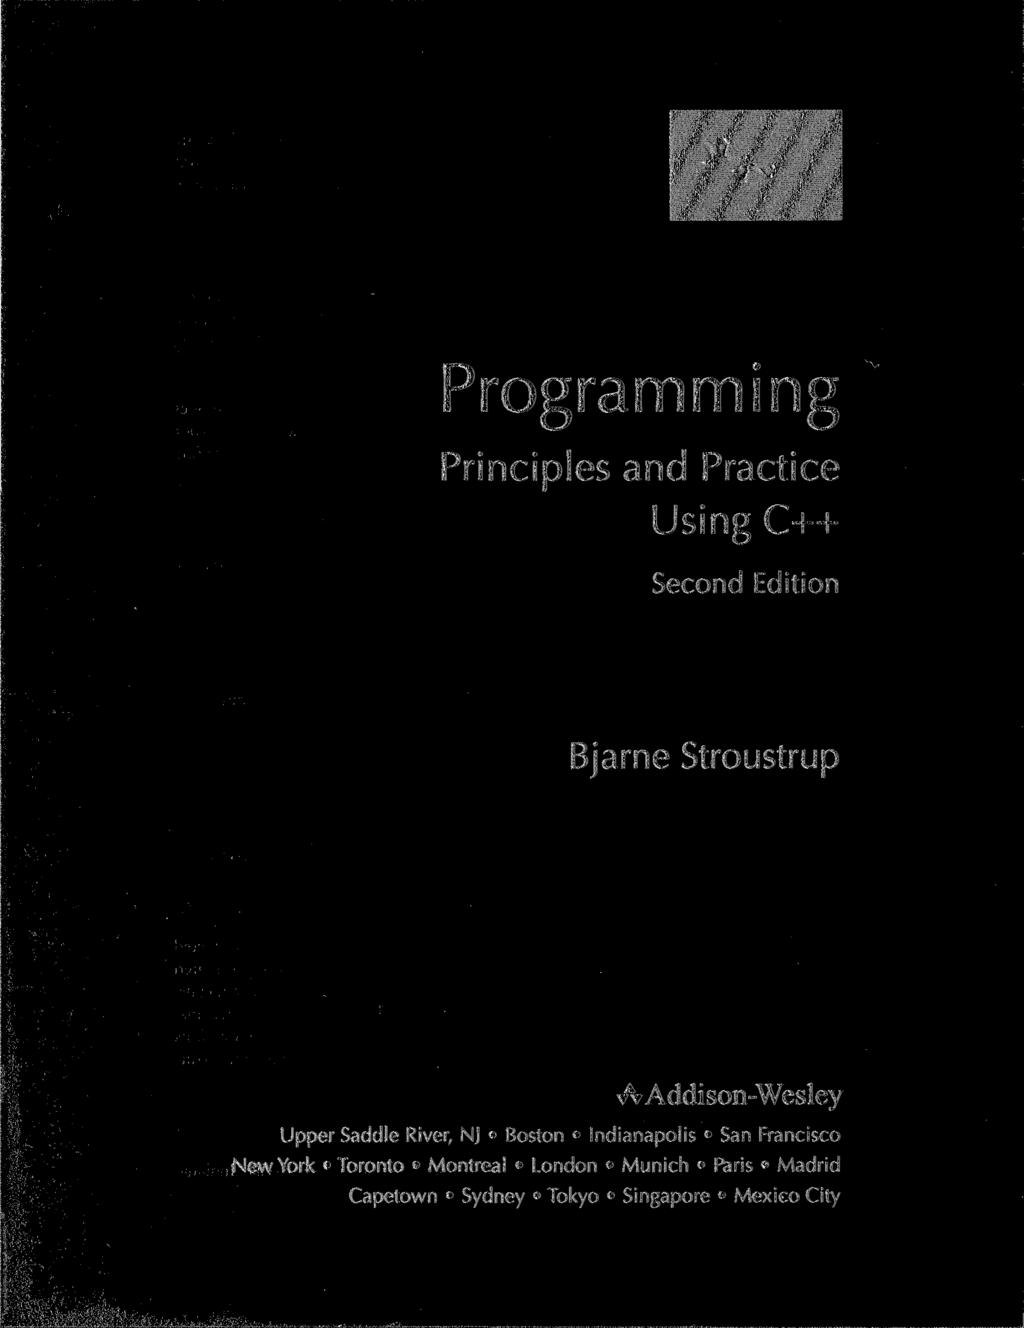 Programming Principles and Practice Using C++ Second Edition Bjarne Stroustrup / Addison-Wesley Upper Saddle River, NJ